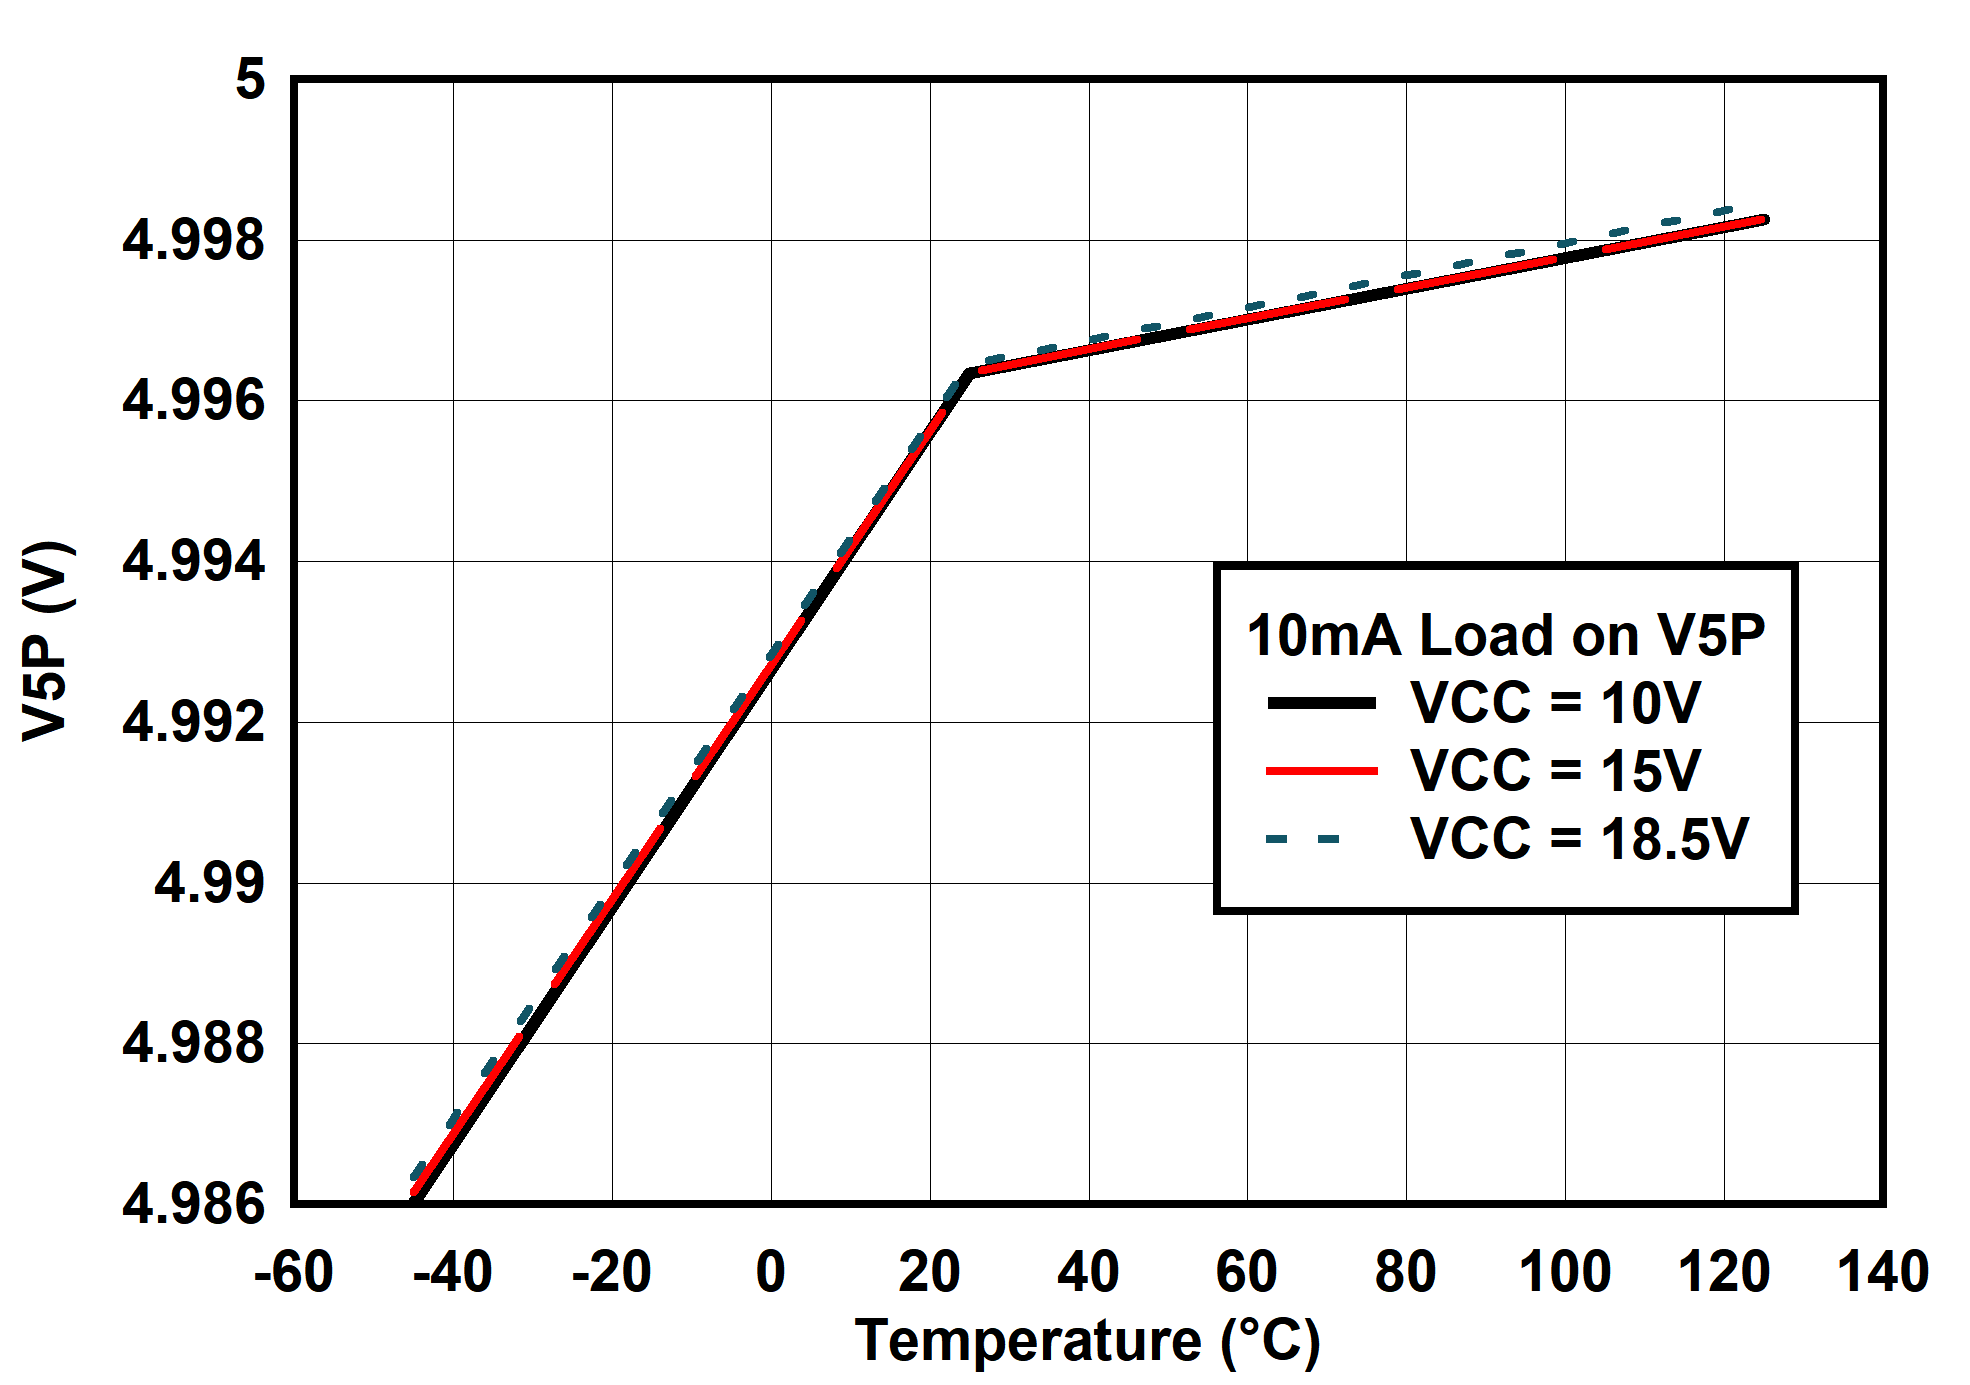 UCC25660 V5P
                        (10mA Load)vs Temperature